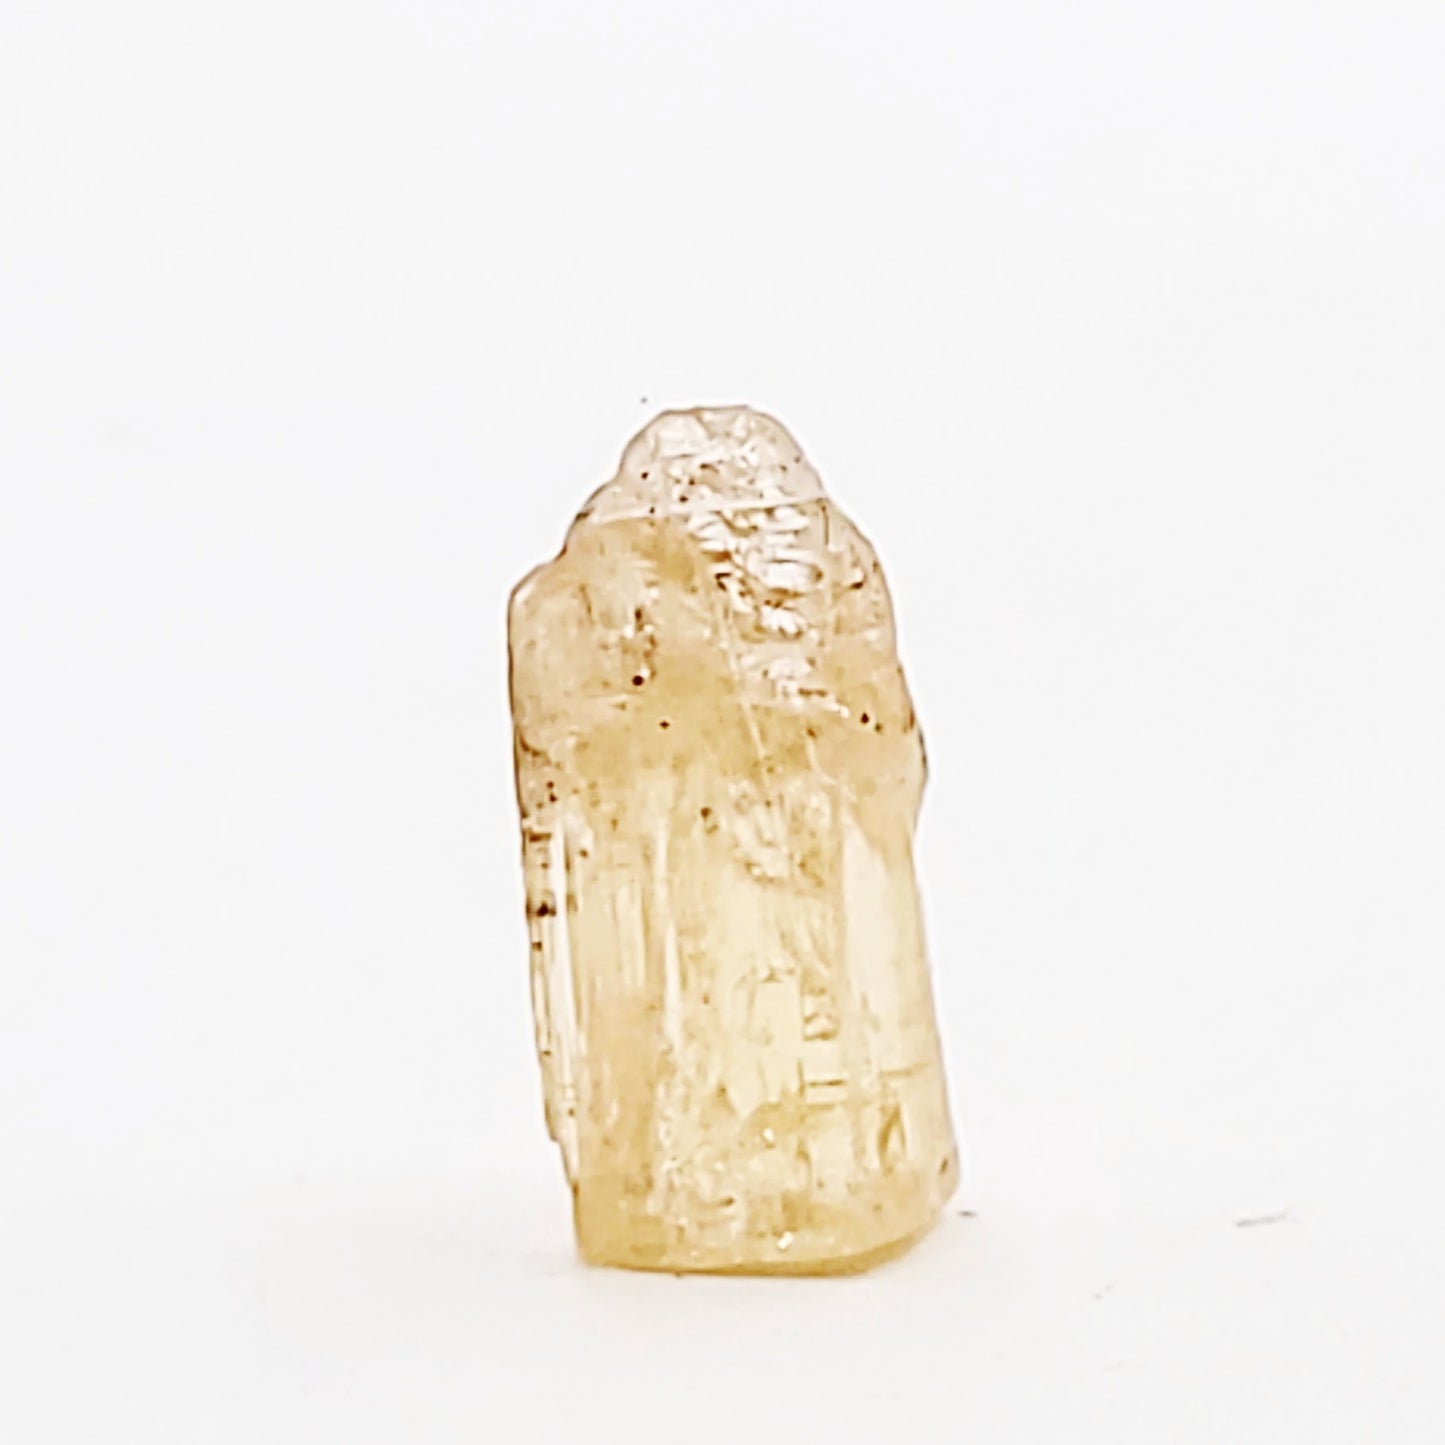 Golden Topaz Imperial Topaz Rough Gemstone 1.5g - Elevated Metaphysical